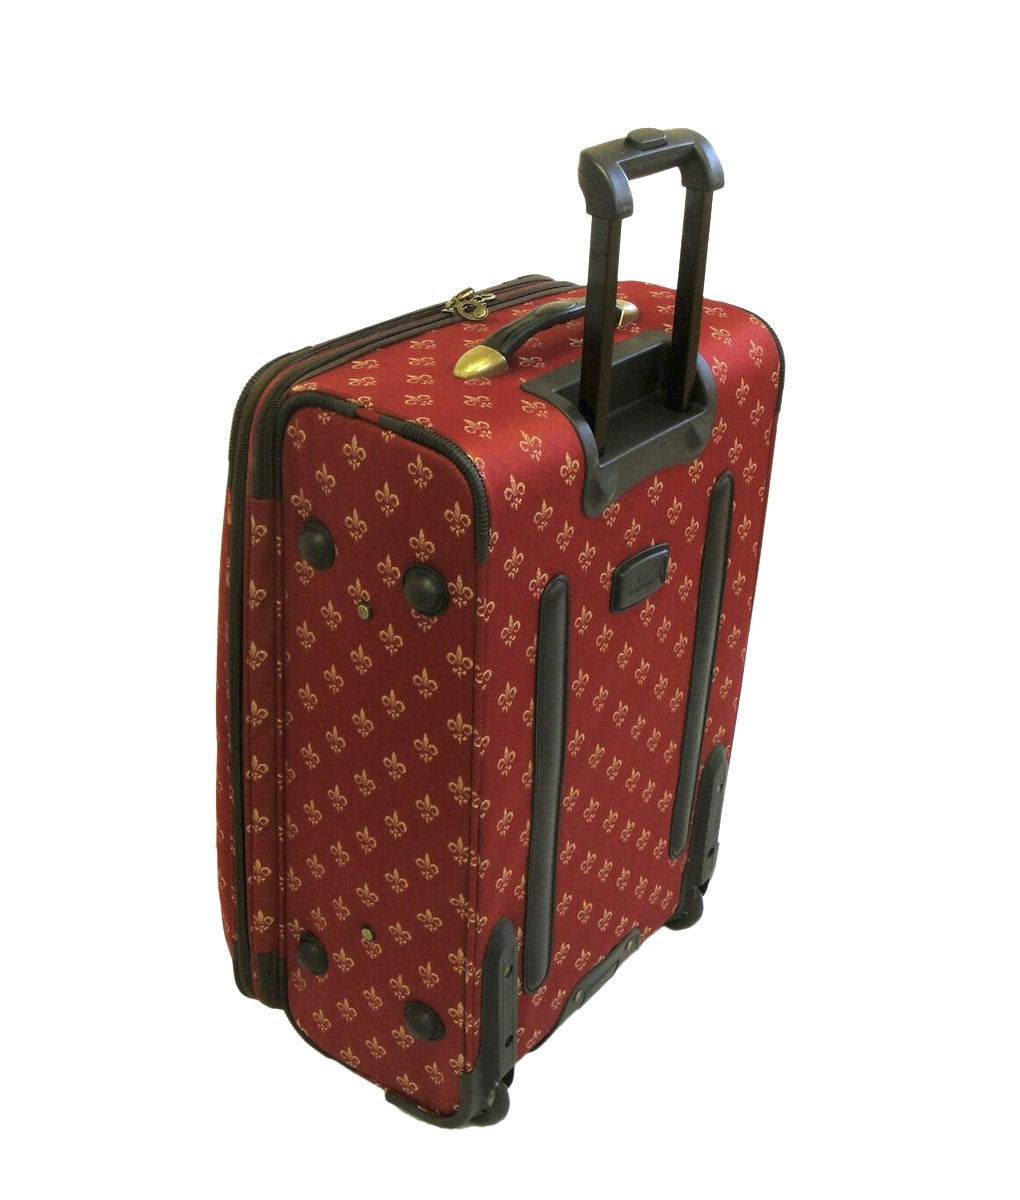 American Flyer Fleur De Lis 4-Piece Luggage Set 54500-4 RED - The